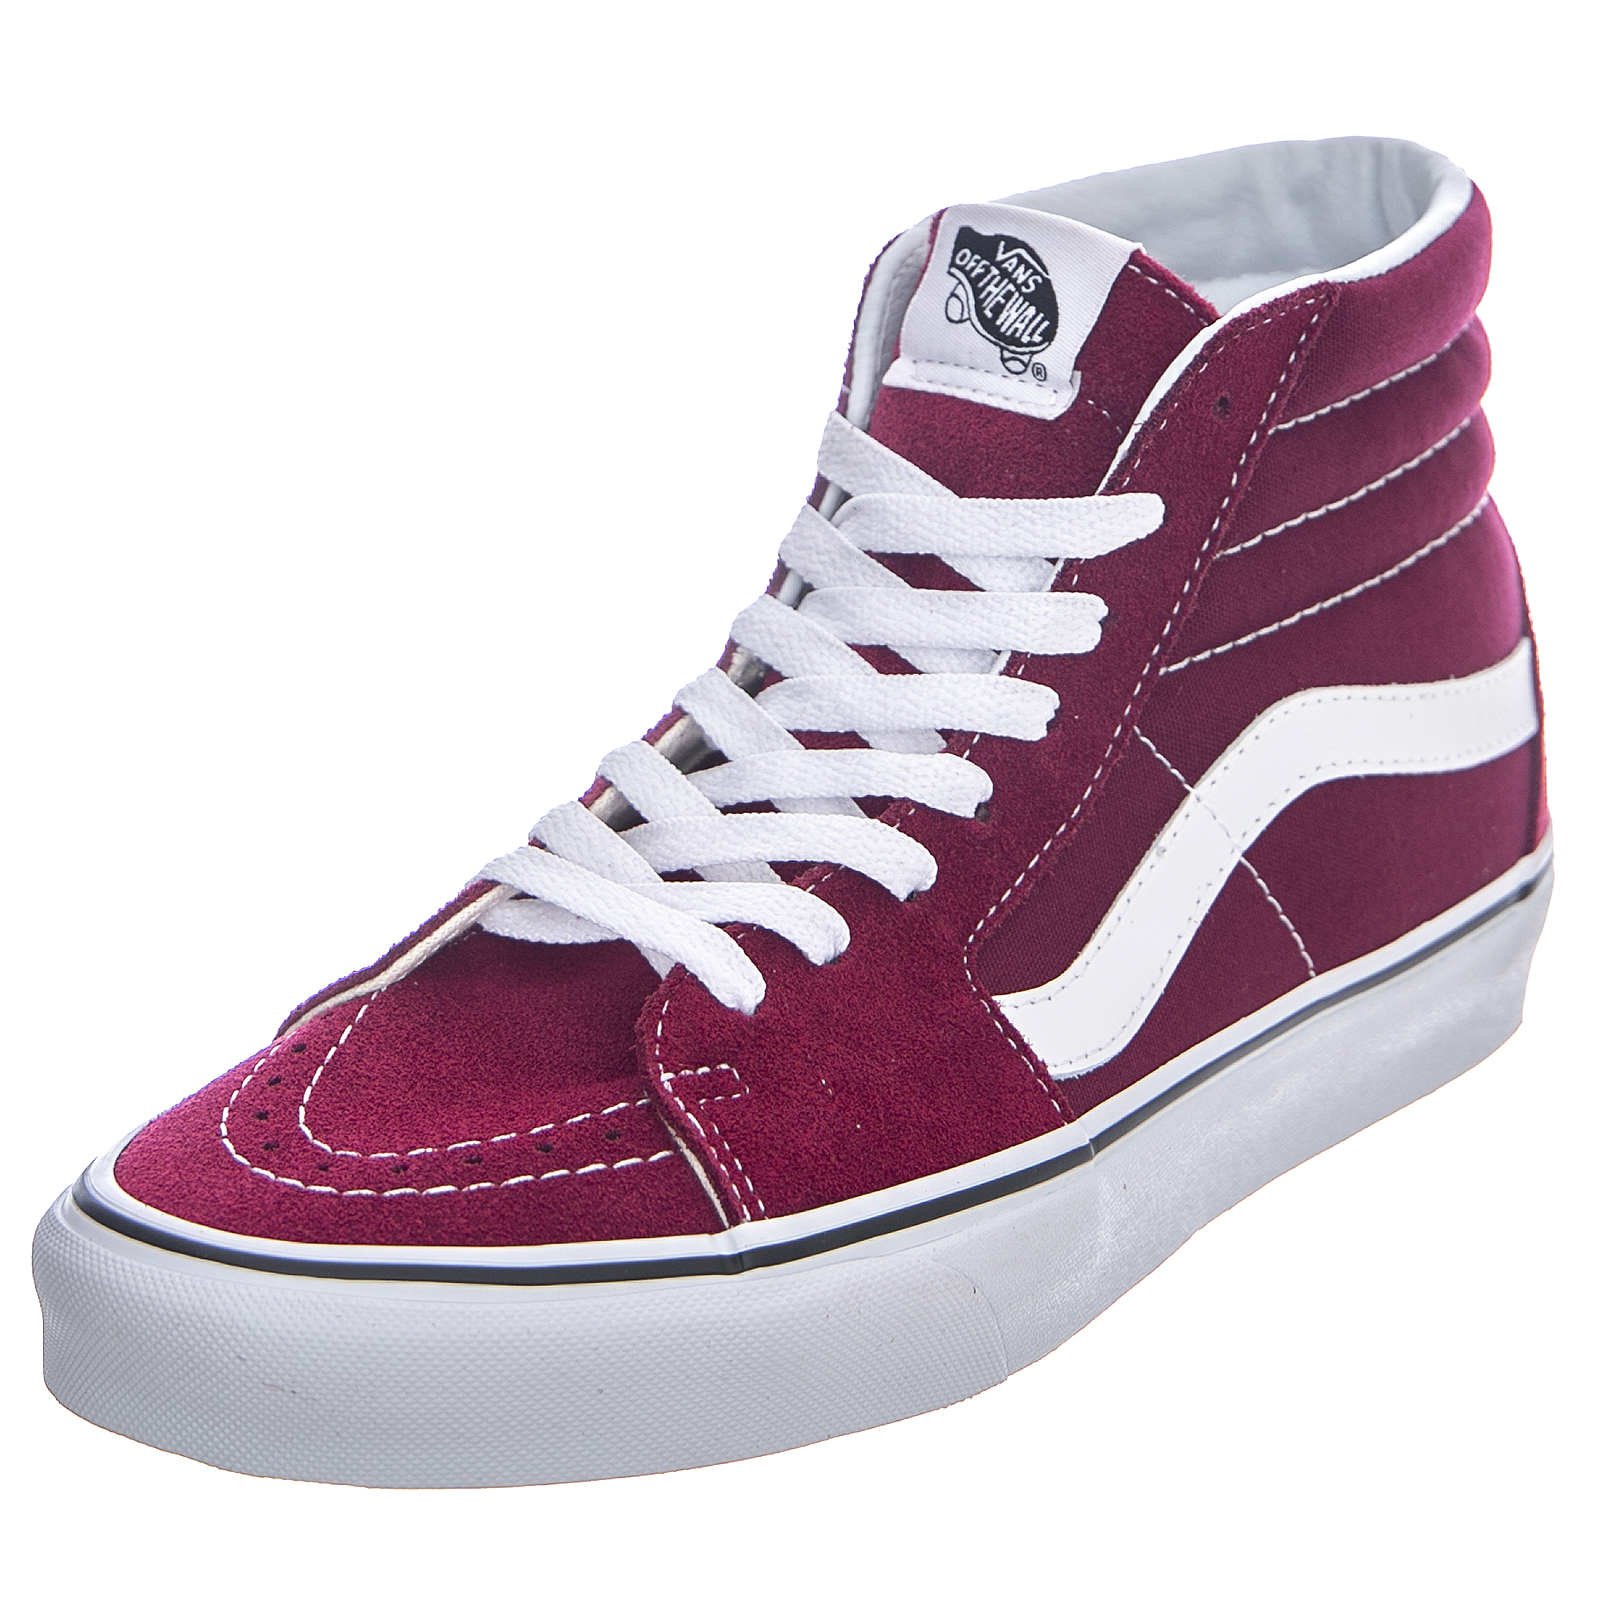 Vans ua sk8-hi sneakers - burgundy / true white - scarpe alte uomo bordeaux  | eBay